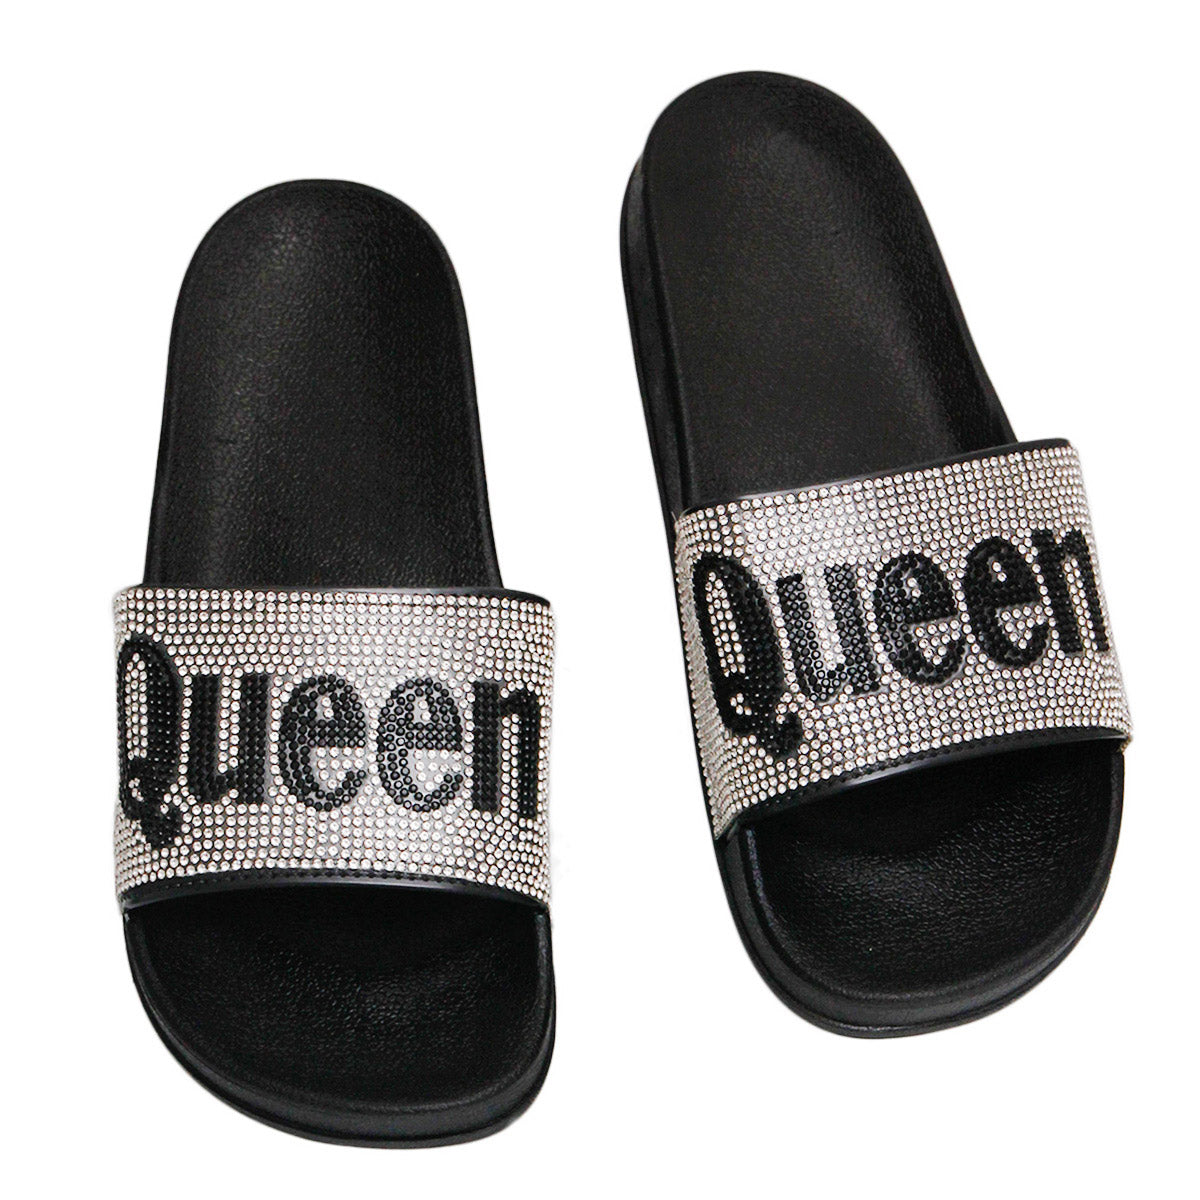 Size 11 Queen Silver Slides